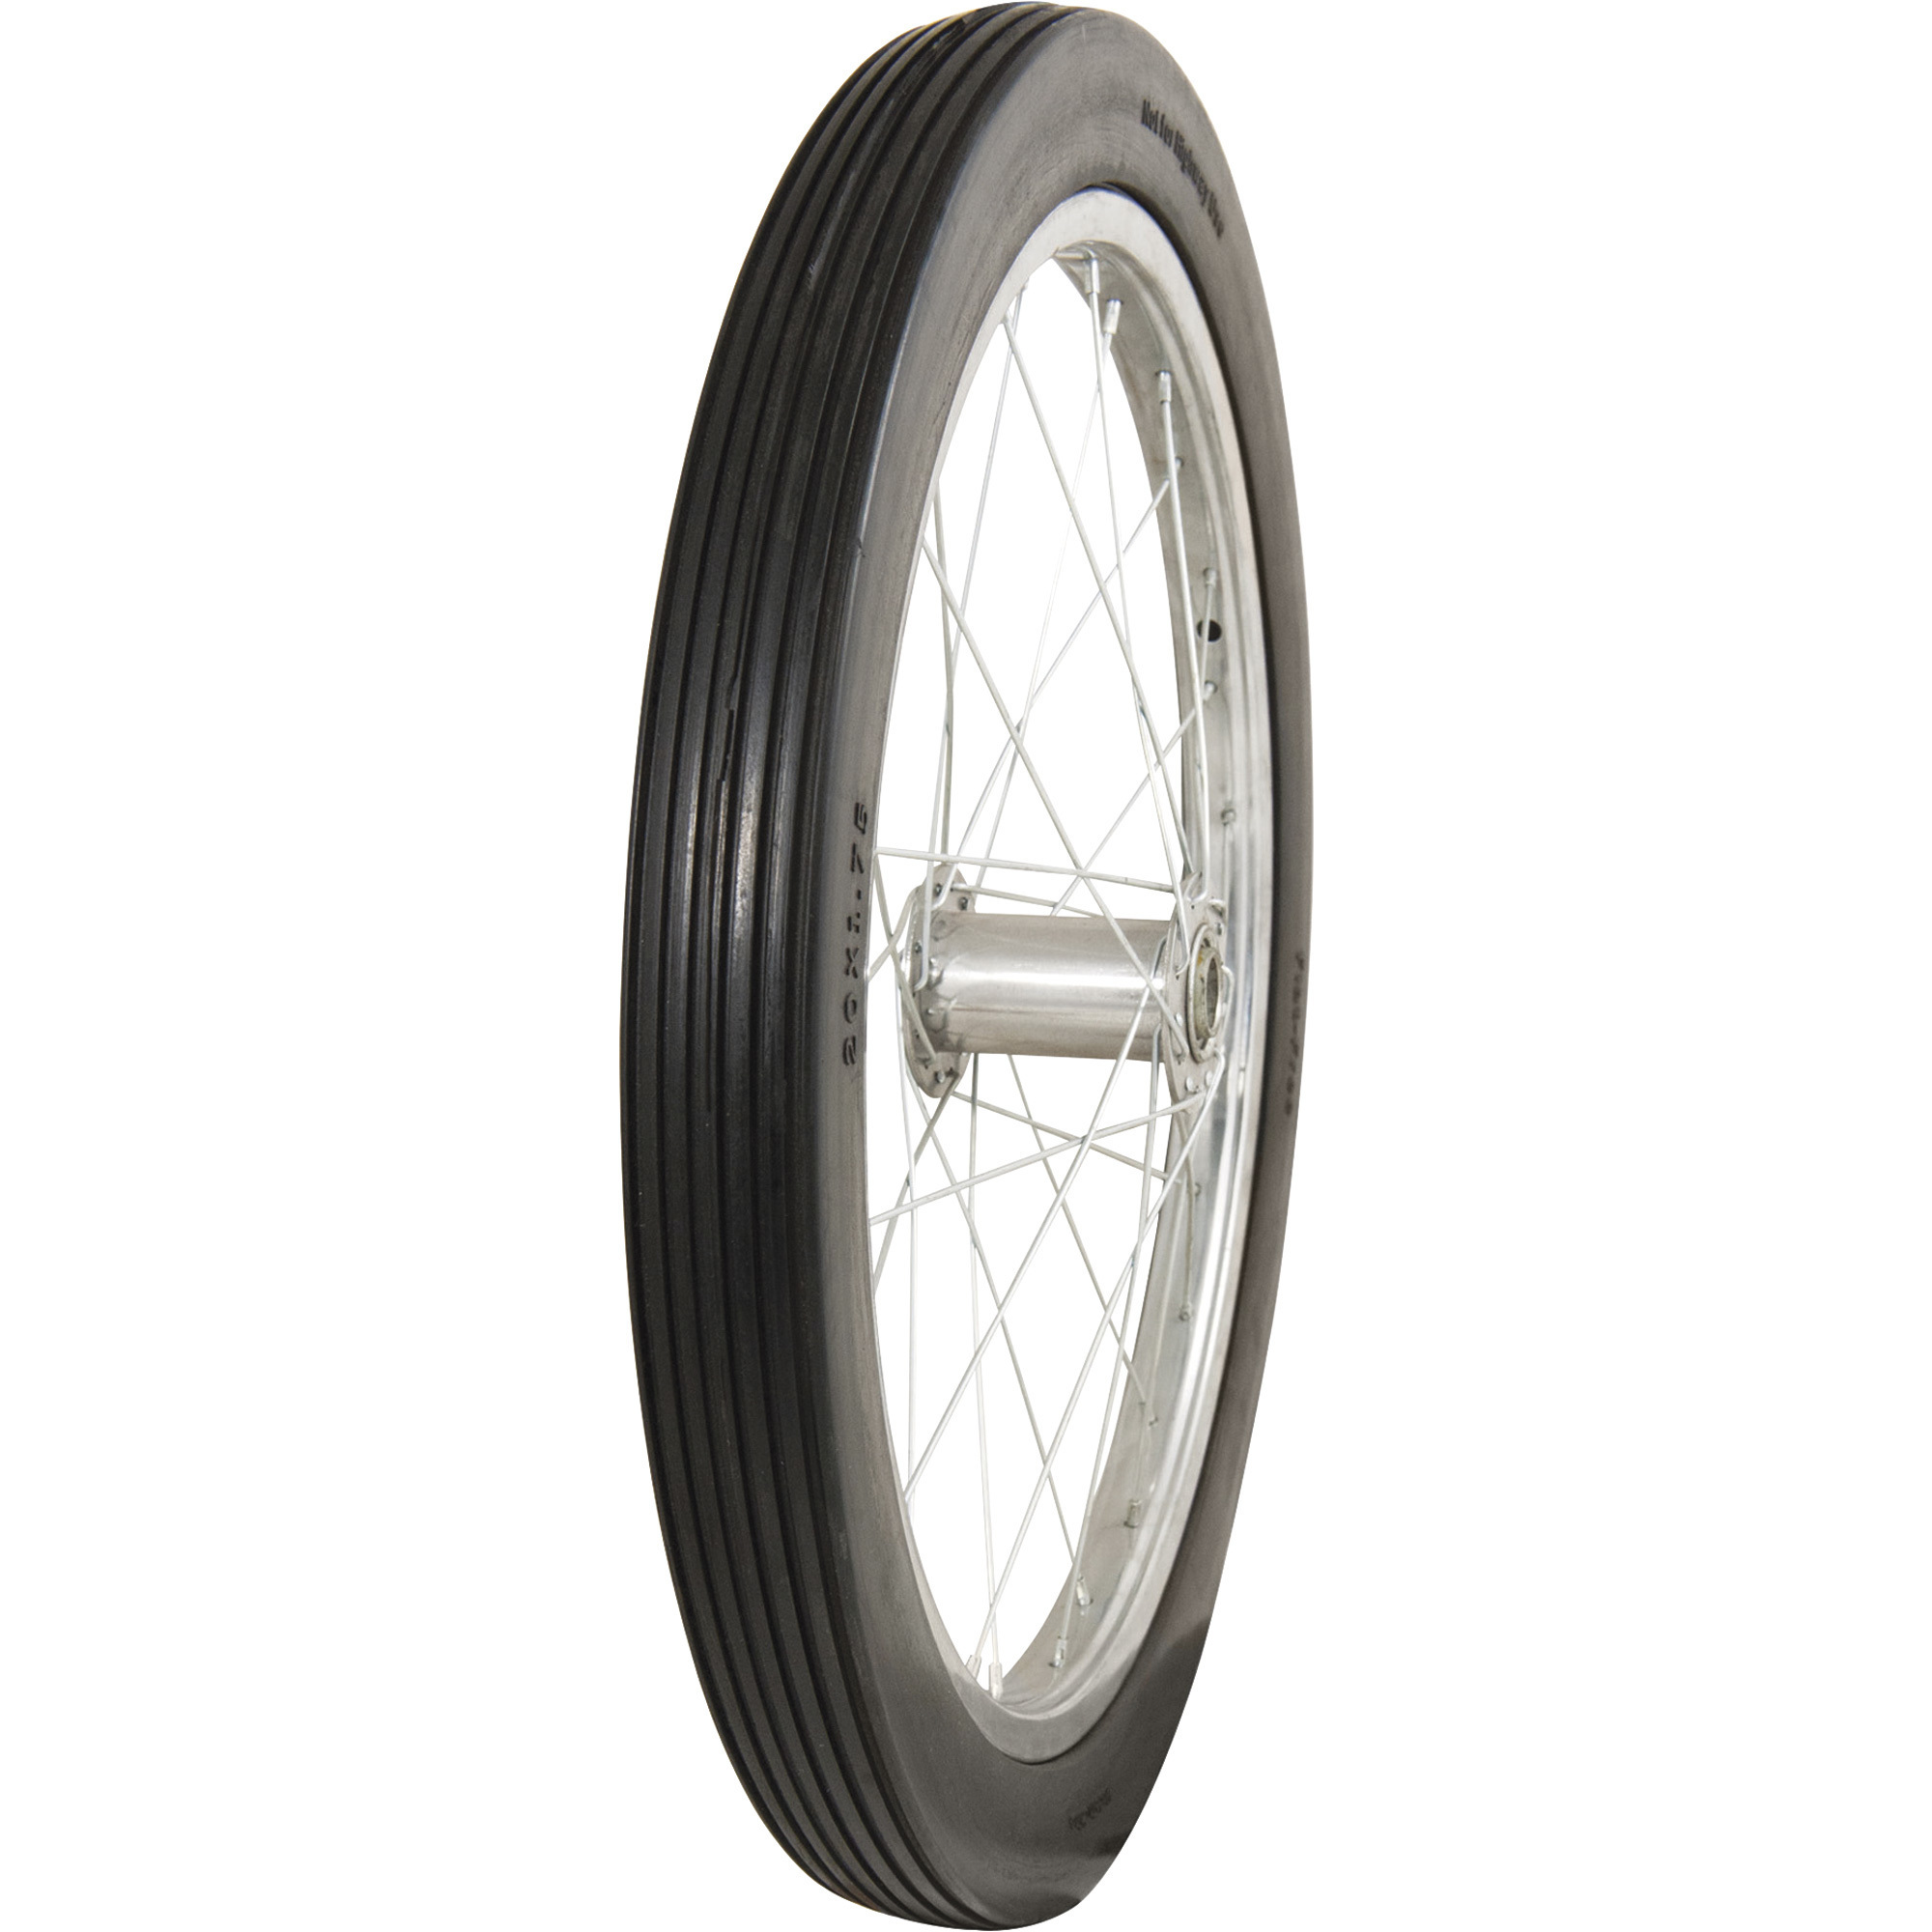 Marathon Tires Flat-Free Tire on Steel Spoke Rim â 3/4Inch Bore, 20 x 1.75Inch